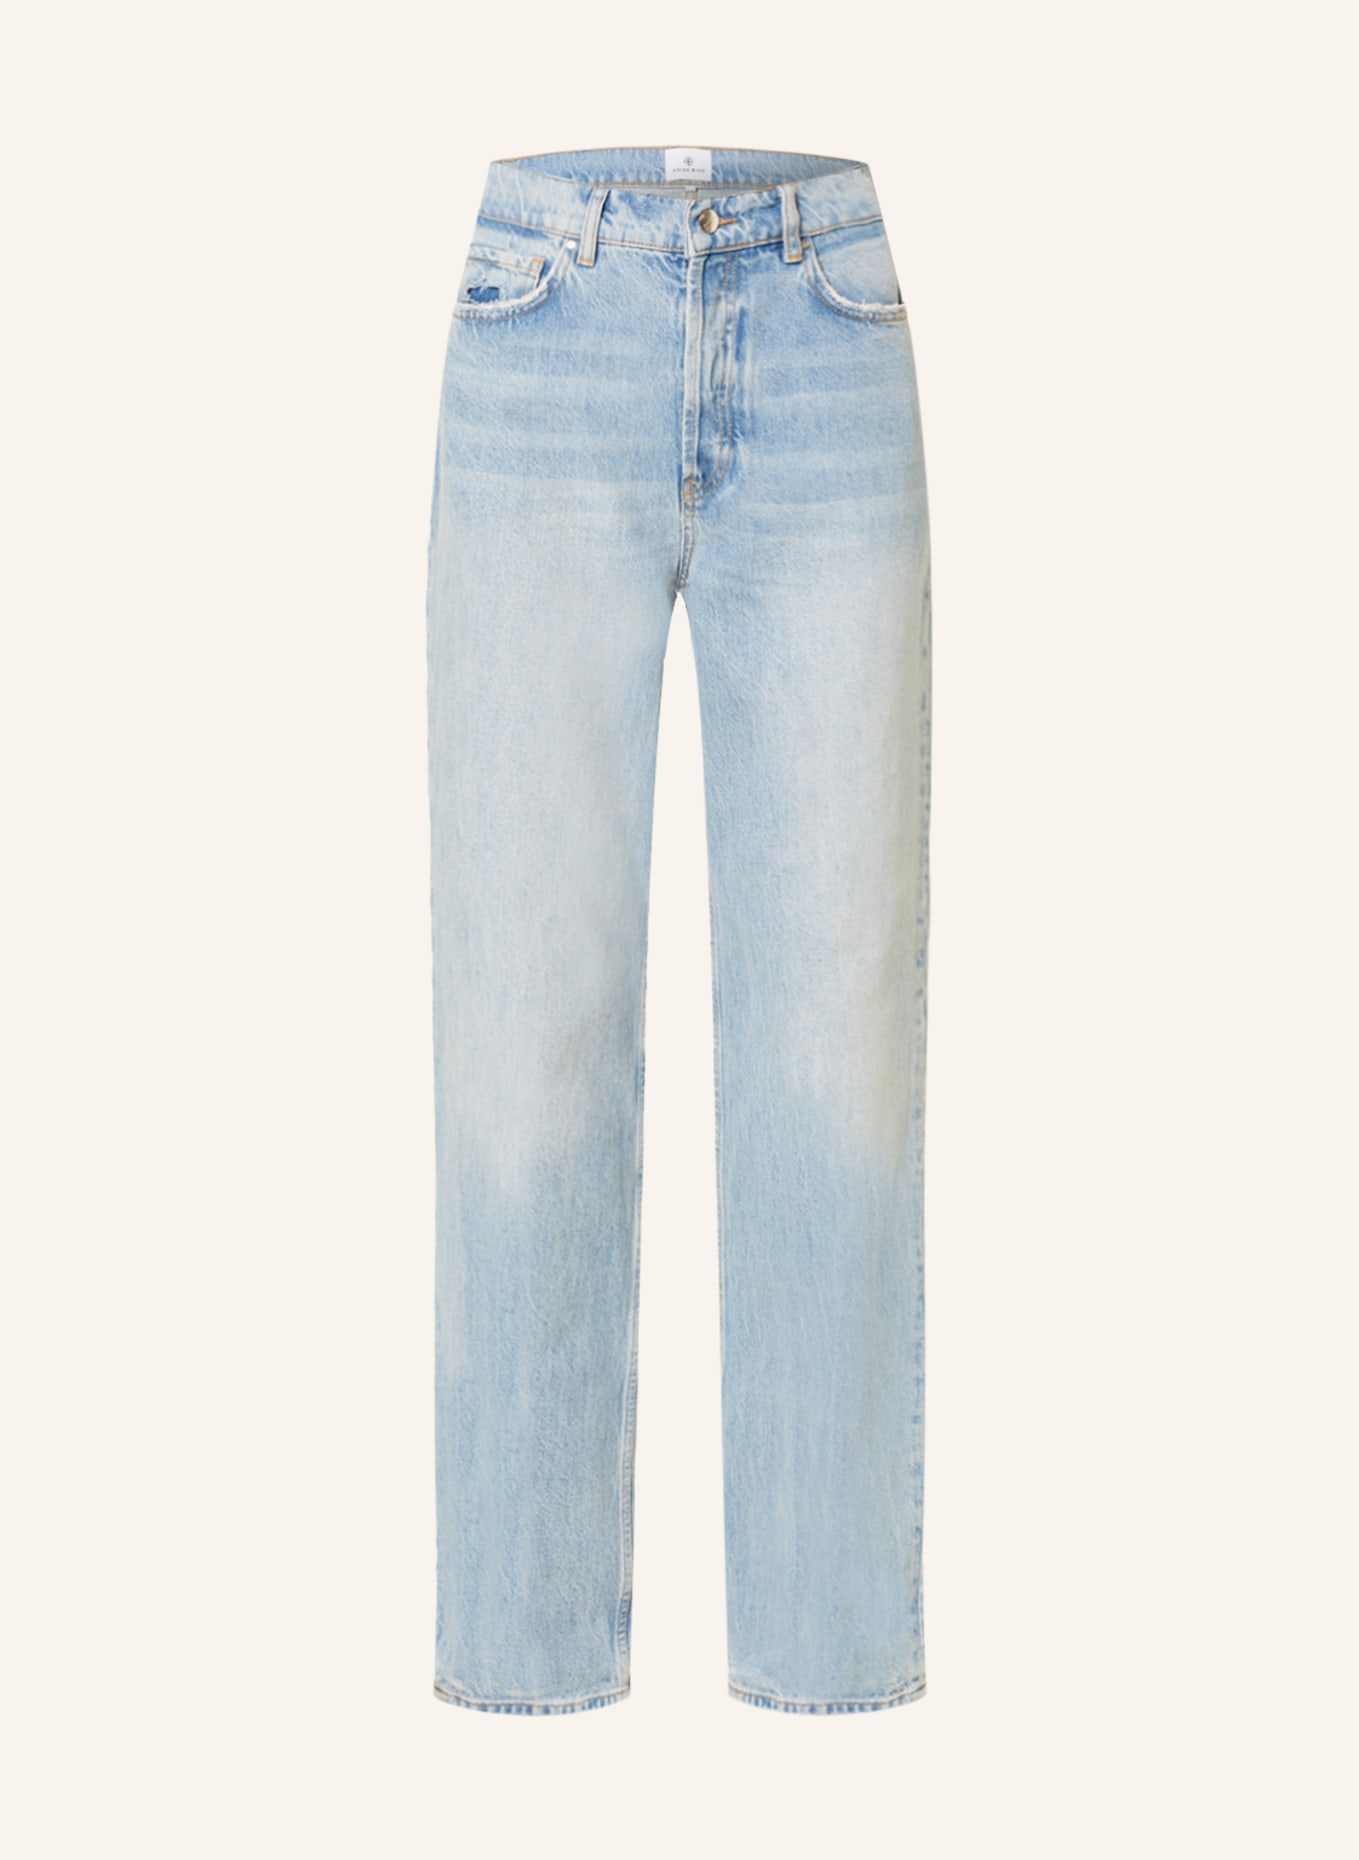 ANINE BING Jeans OLSEN, Farbe: WASHED BLUE WASHED BLUE (Bild 1)